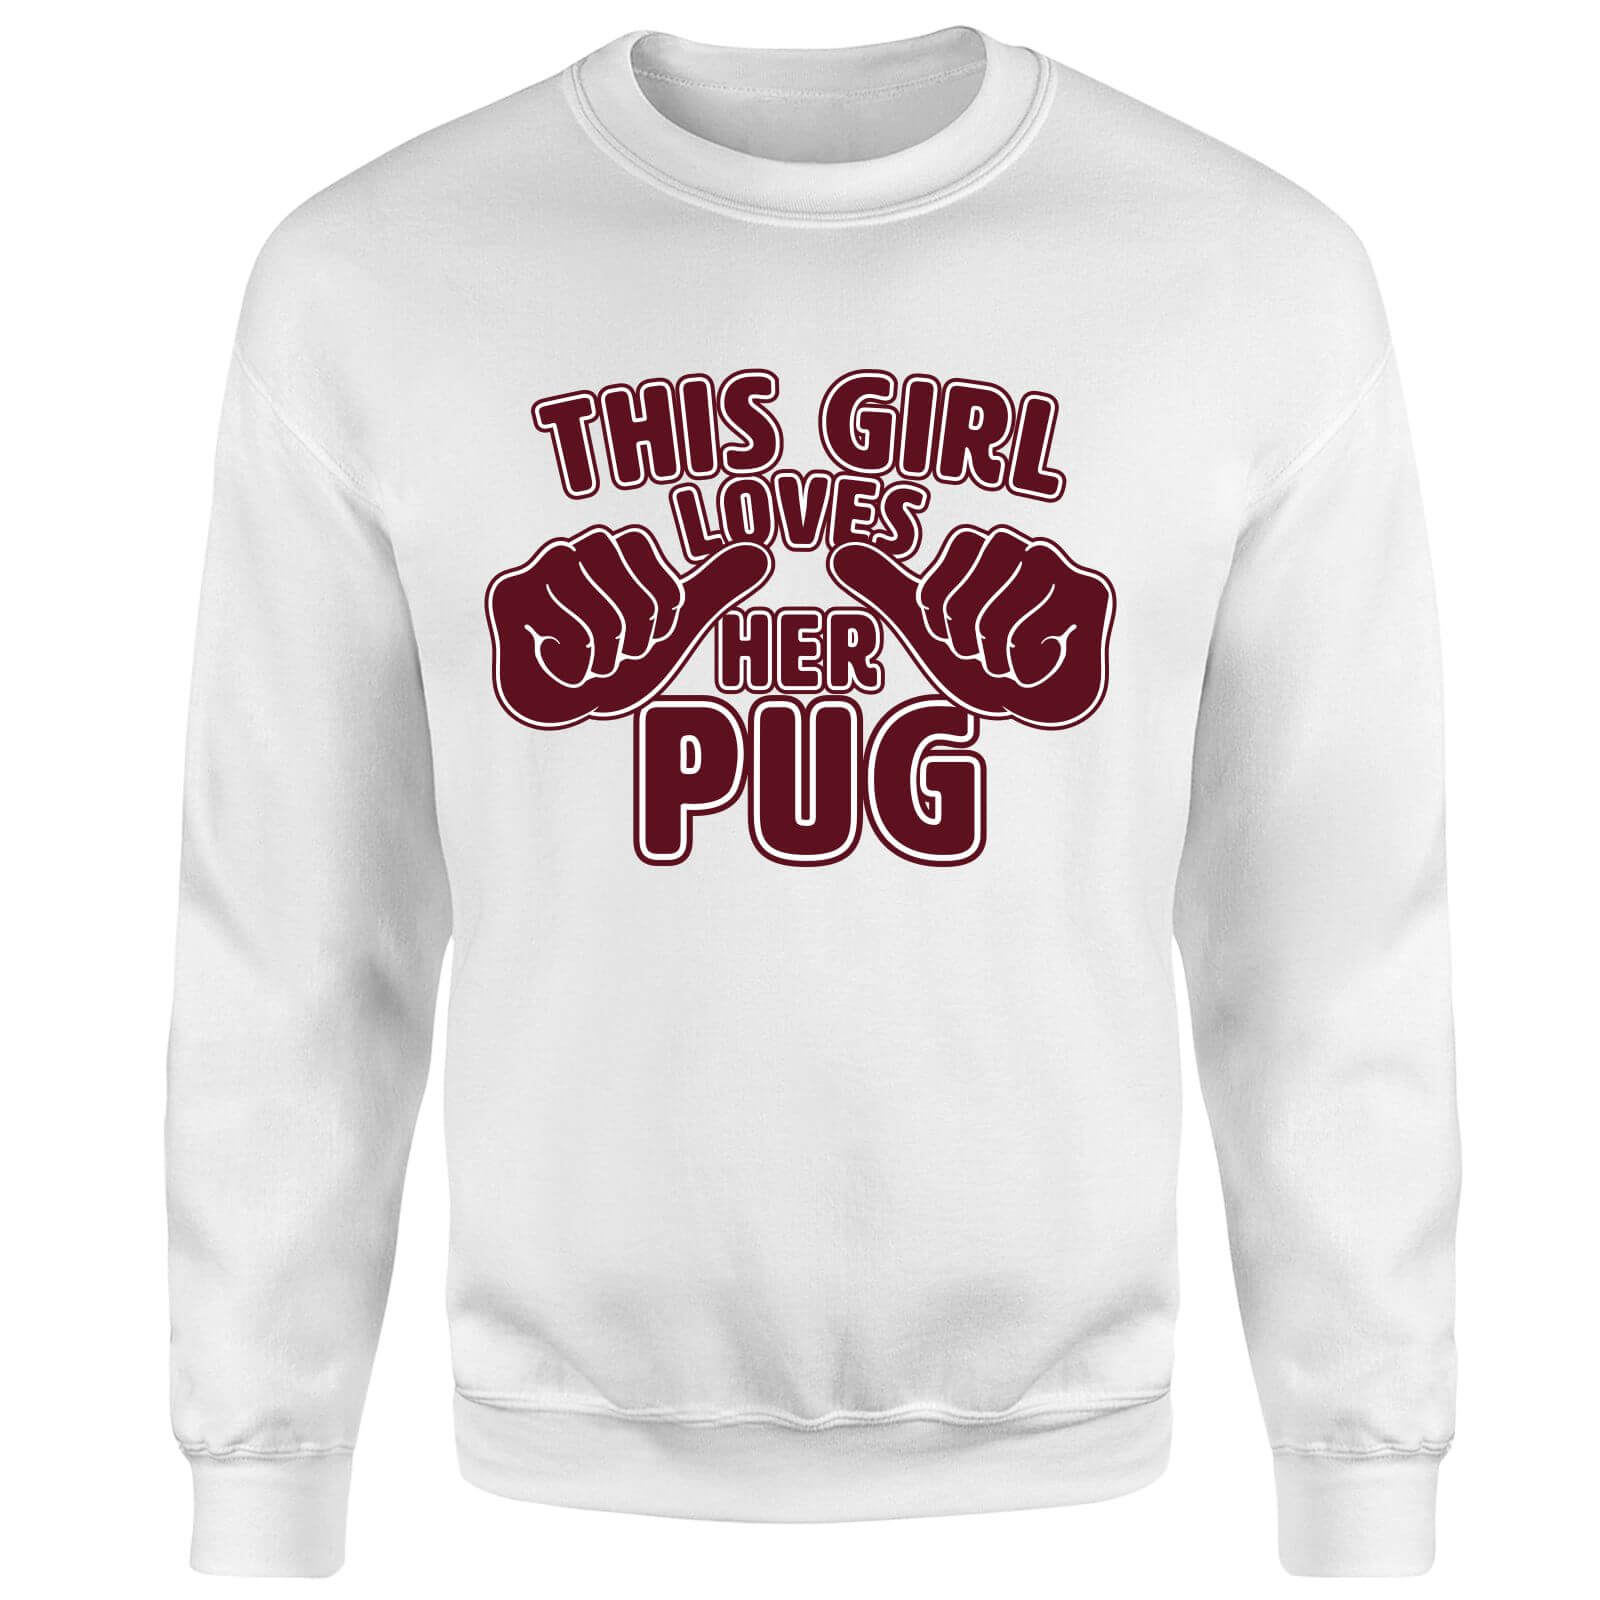 This Girl Loves Her Pug Sweatshirt - White - XL - White